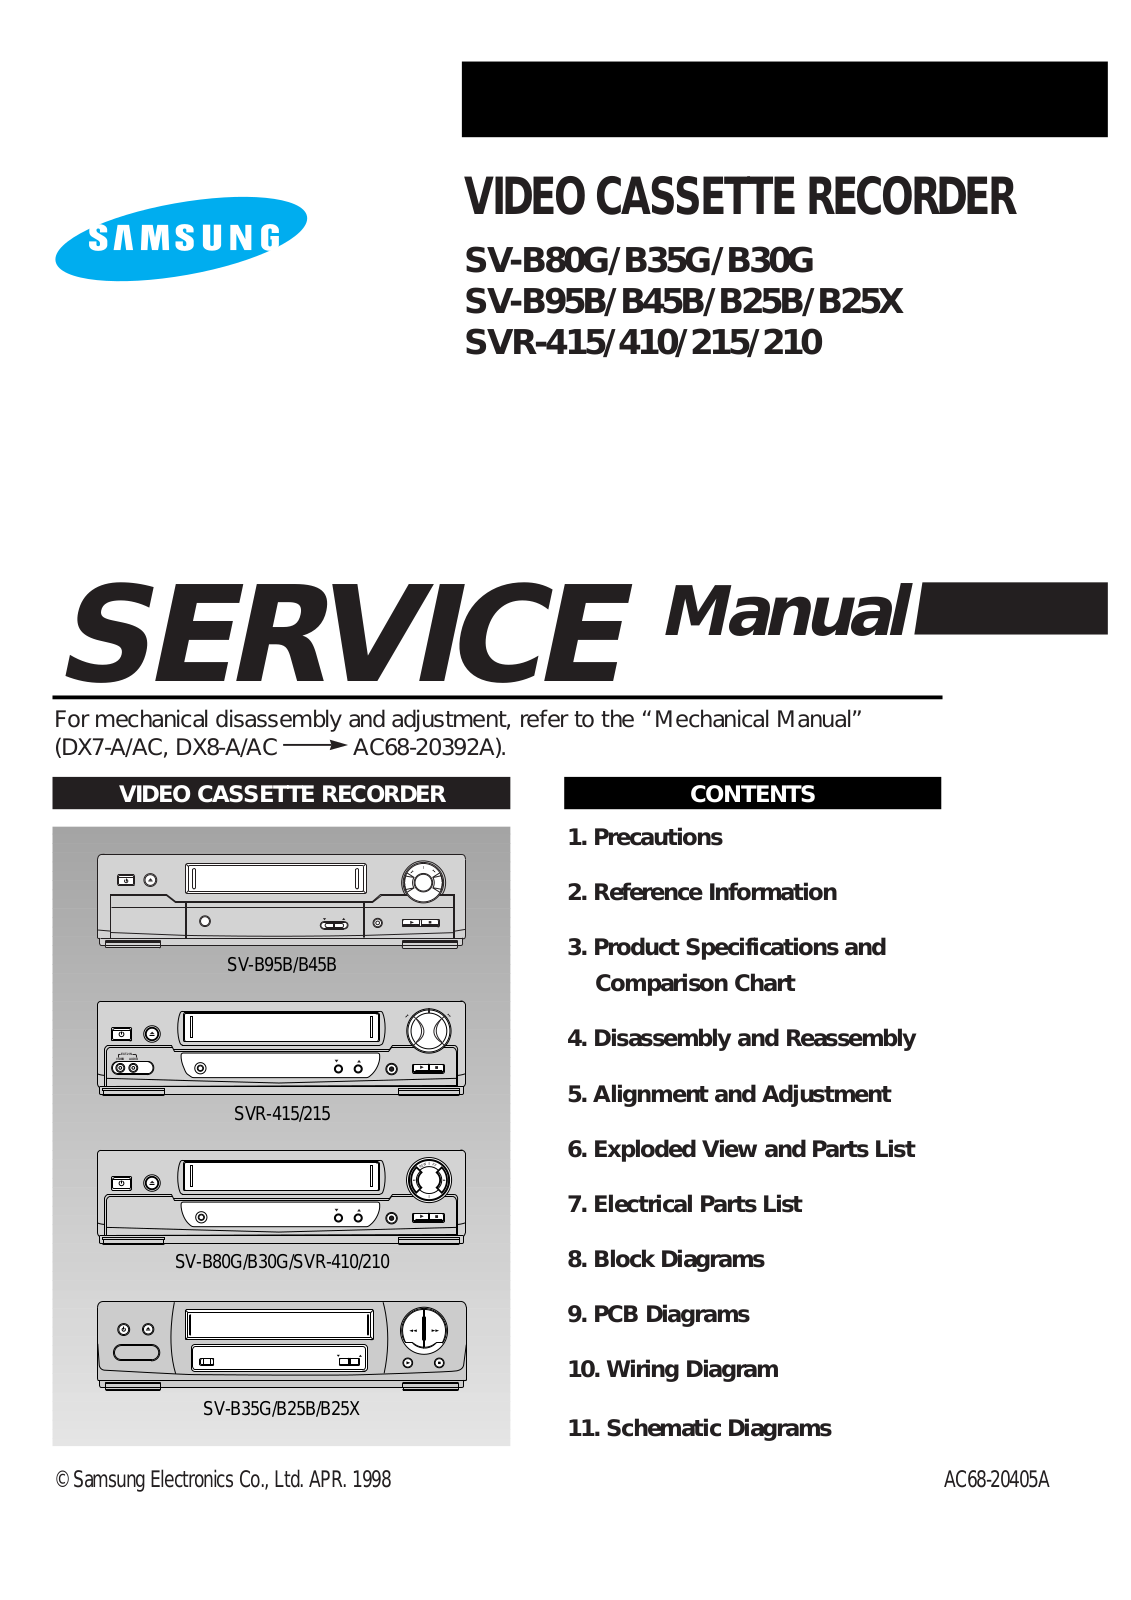 Samsung SVR-215, SVR-210, SVR-410, SV-B25X, SVR-415 Service Manual